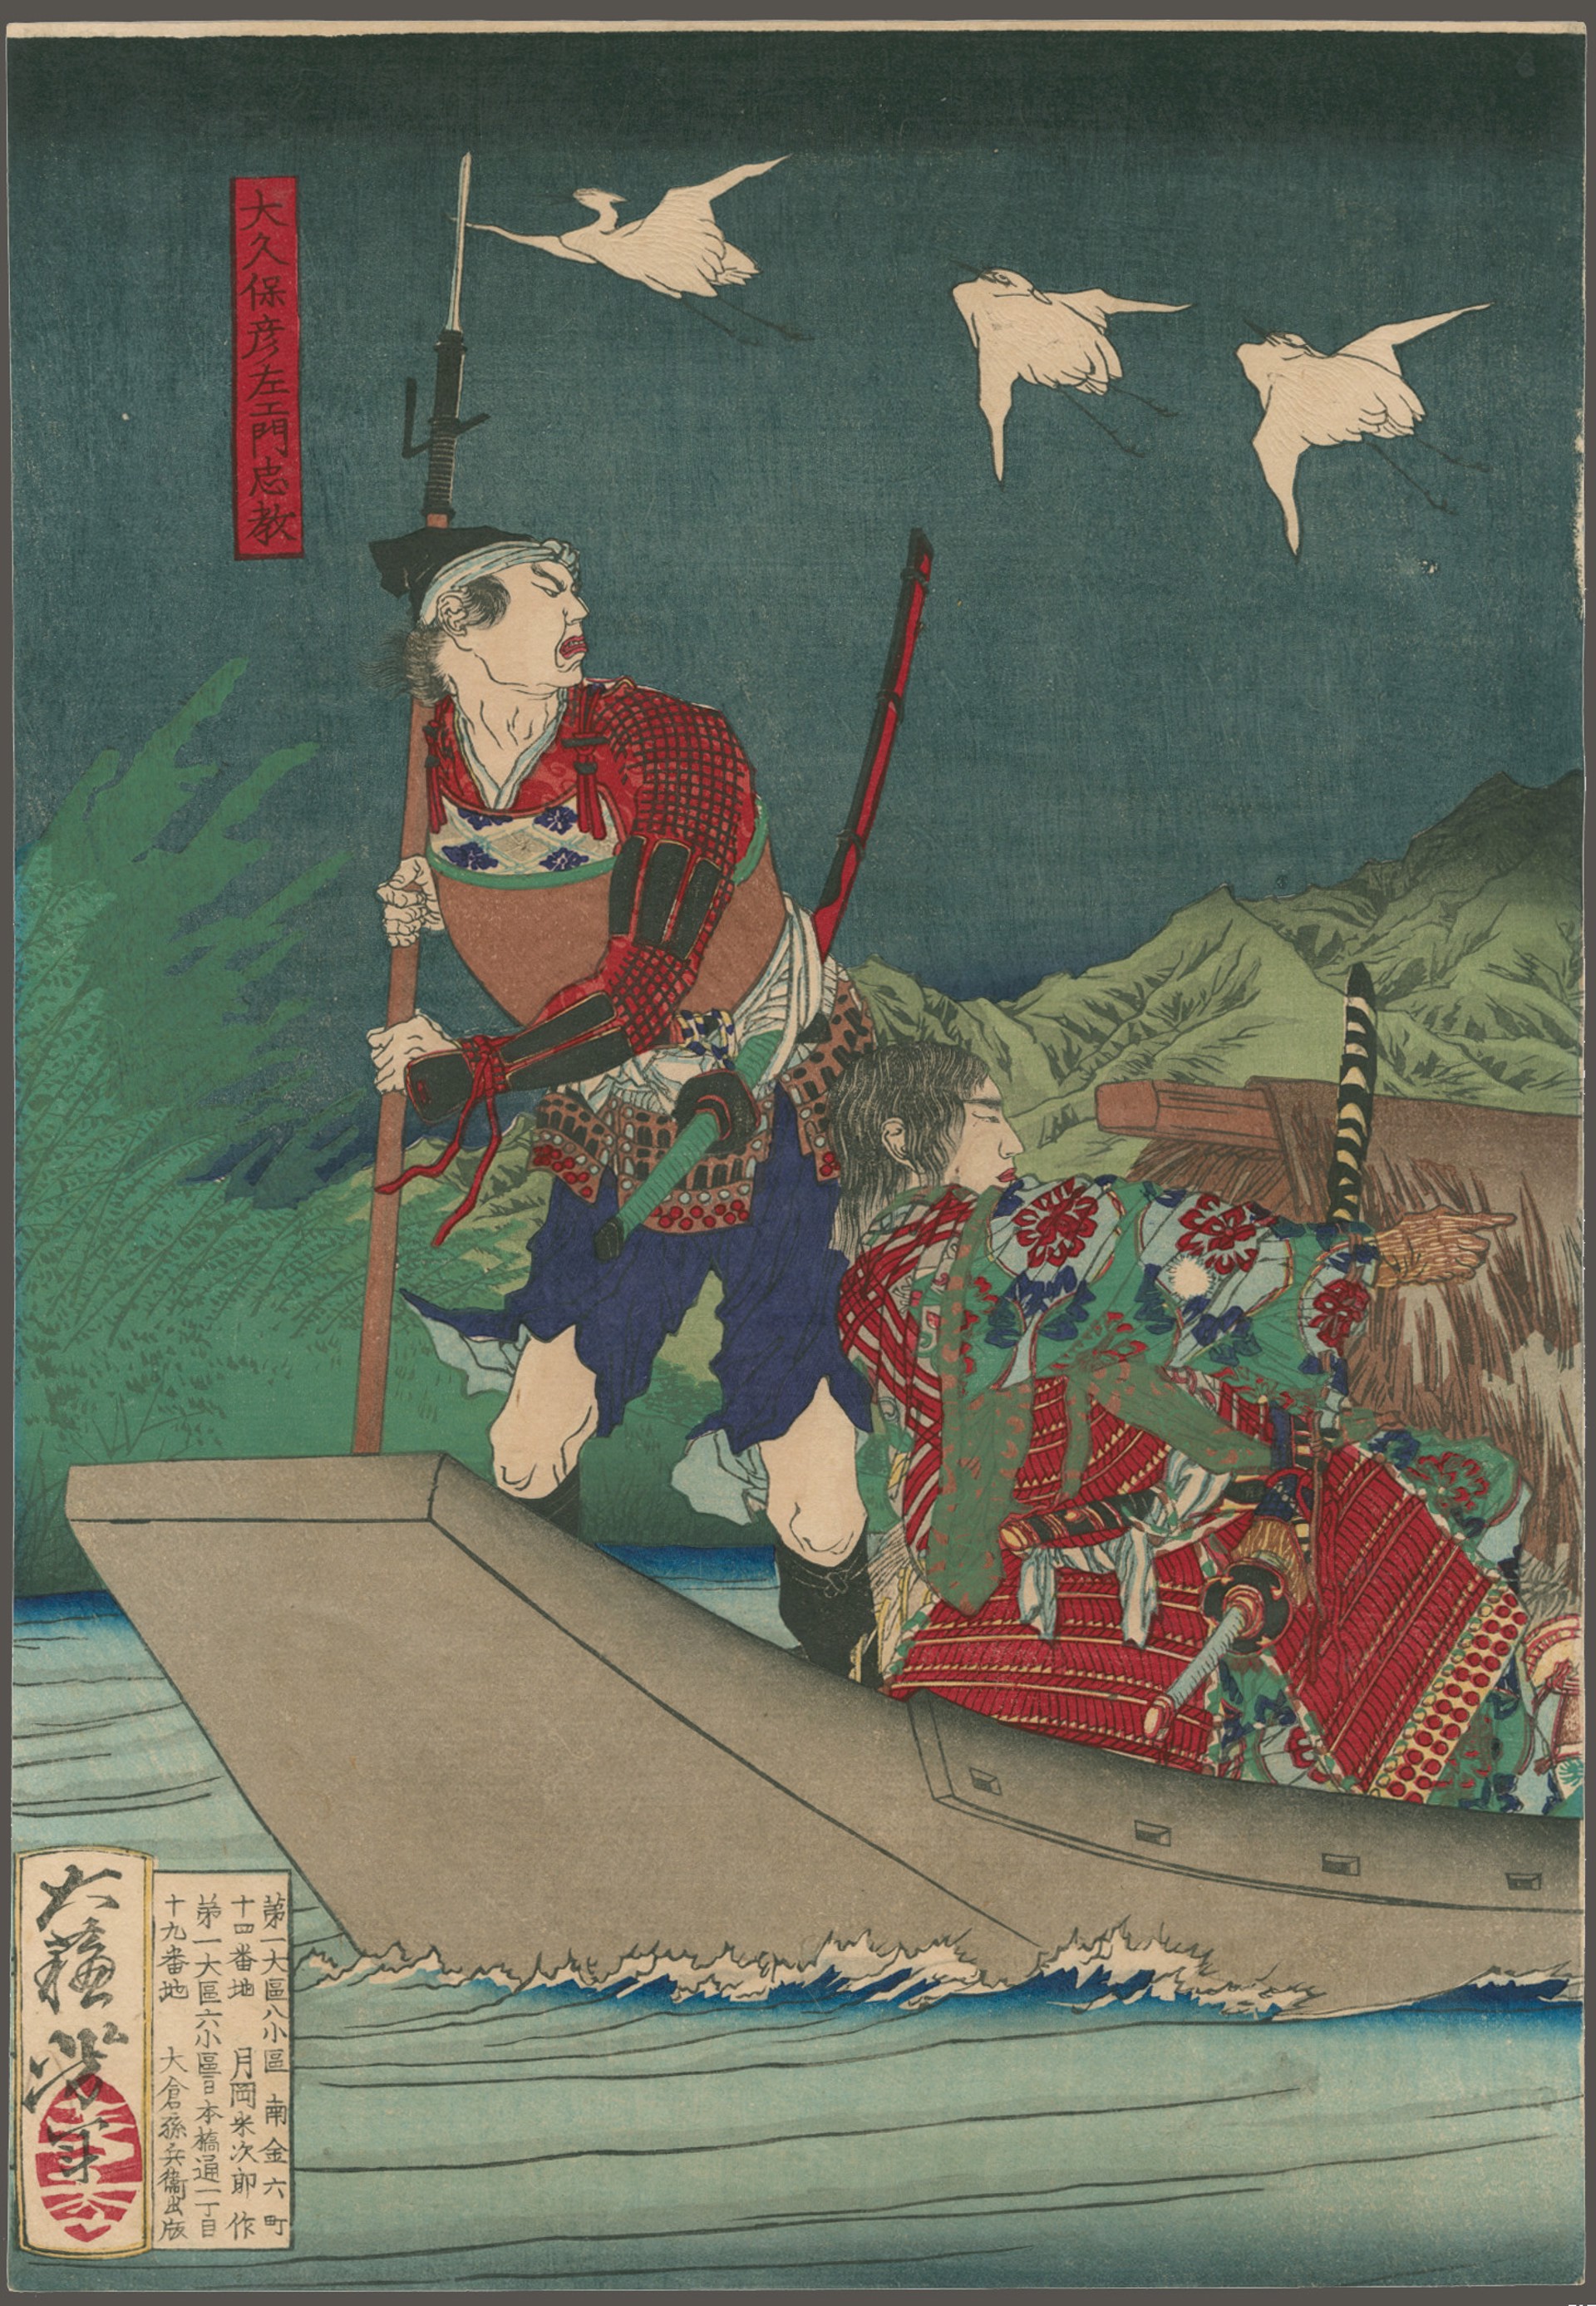 Tokugawa Hidetada, the Second Shogun, Fleeing with Okubo from Sanada Daisuke at the Battle of Osaka Castle Annals of the Tokugawa Administration by Yoshitoshi